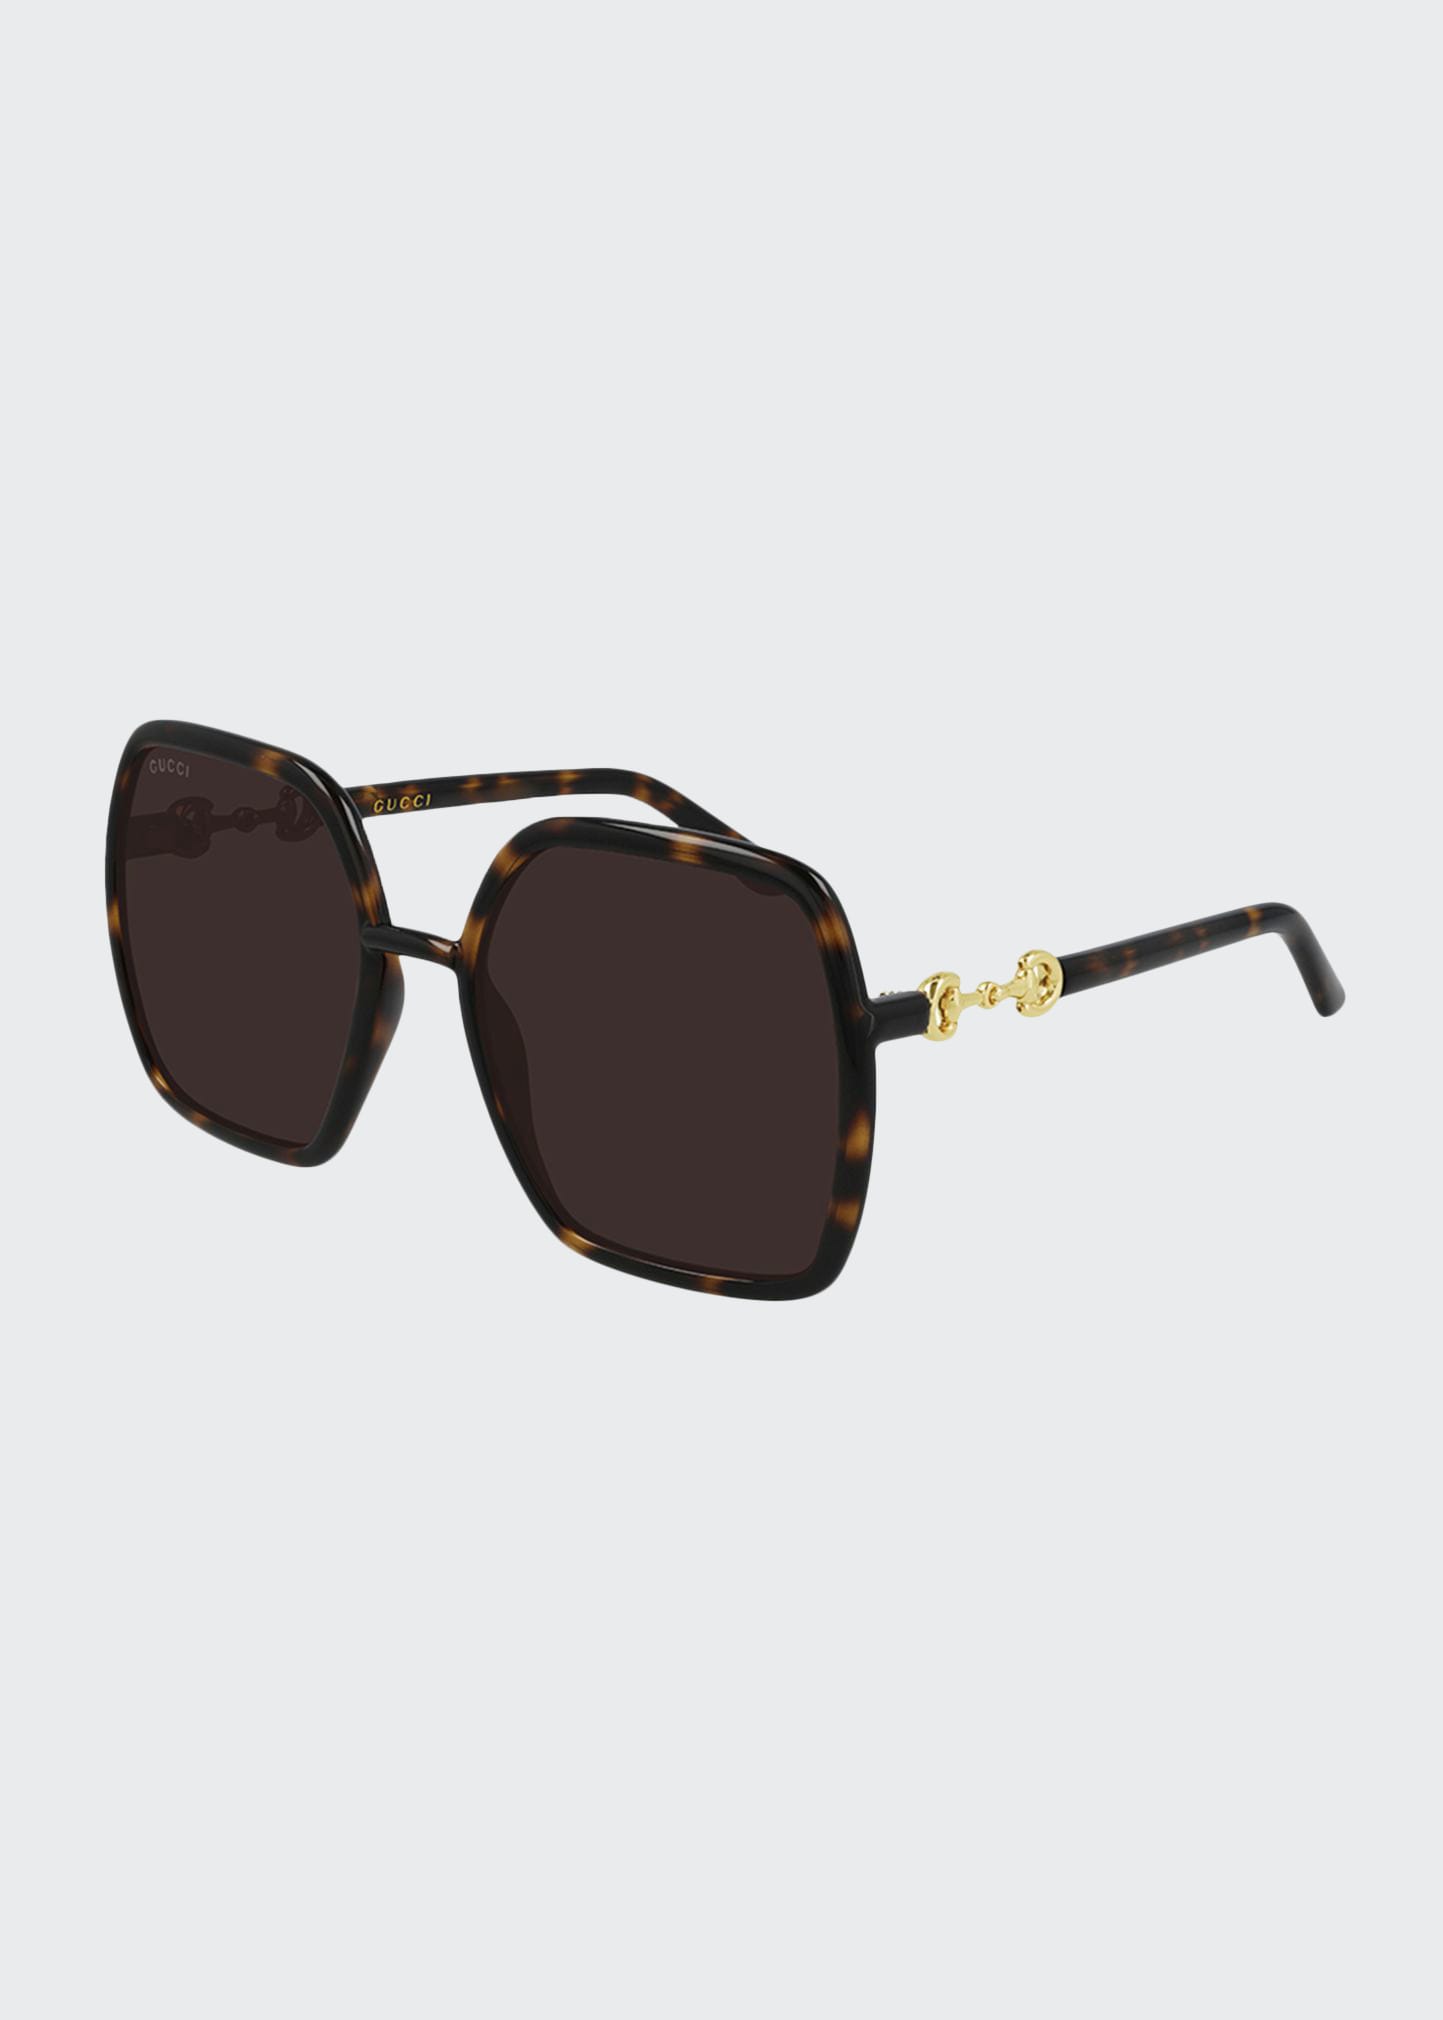 Gucci Oversized Geometric Injected Plastic Sunglasses In Dark Havana